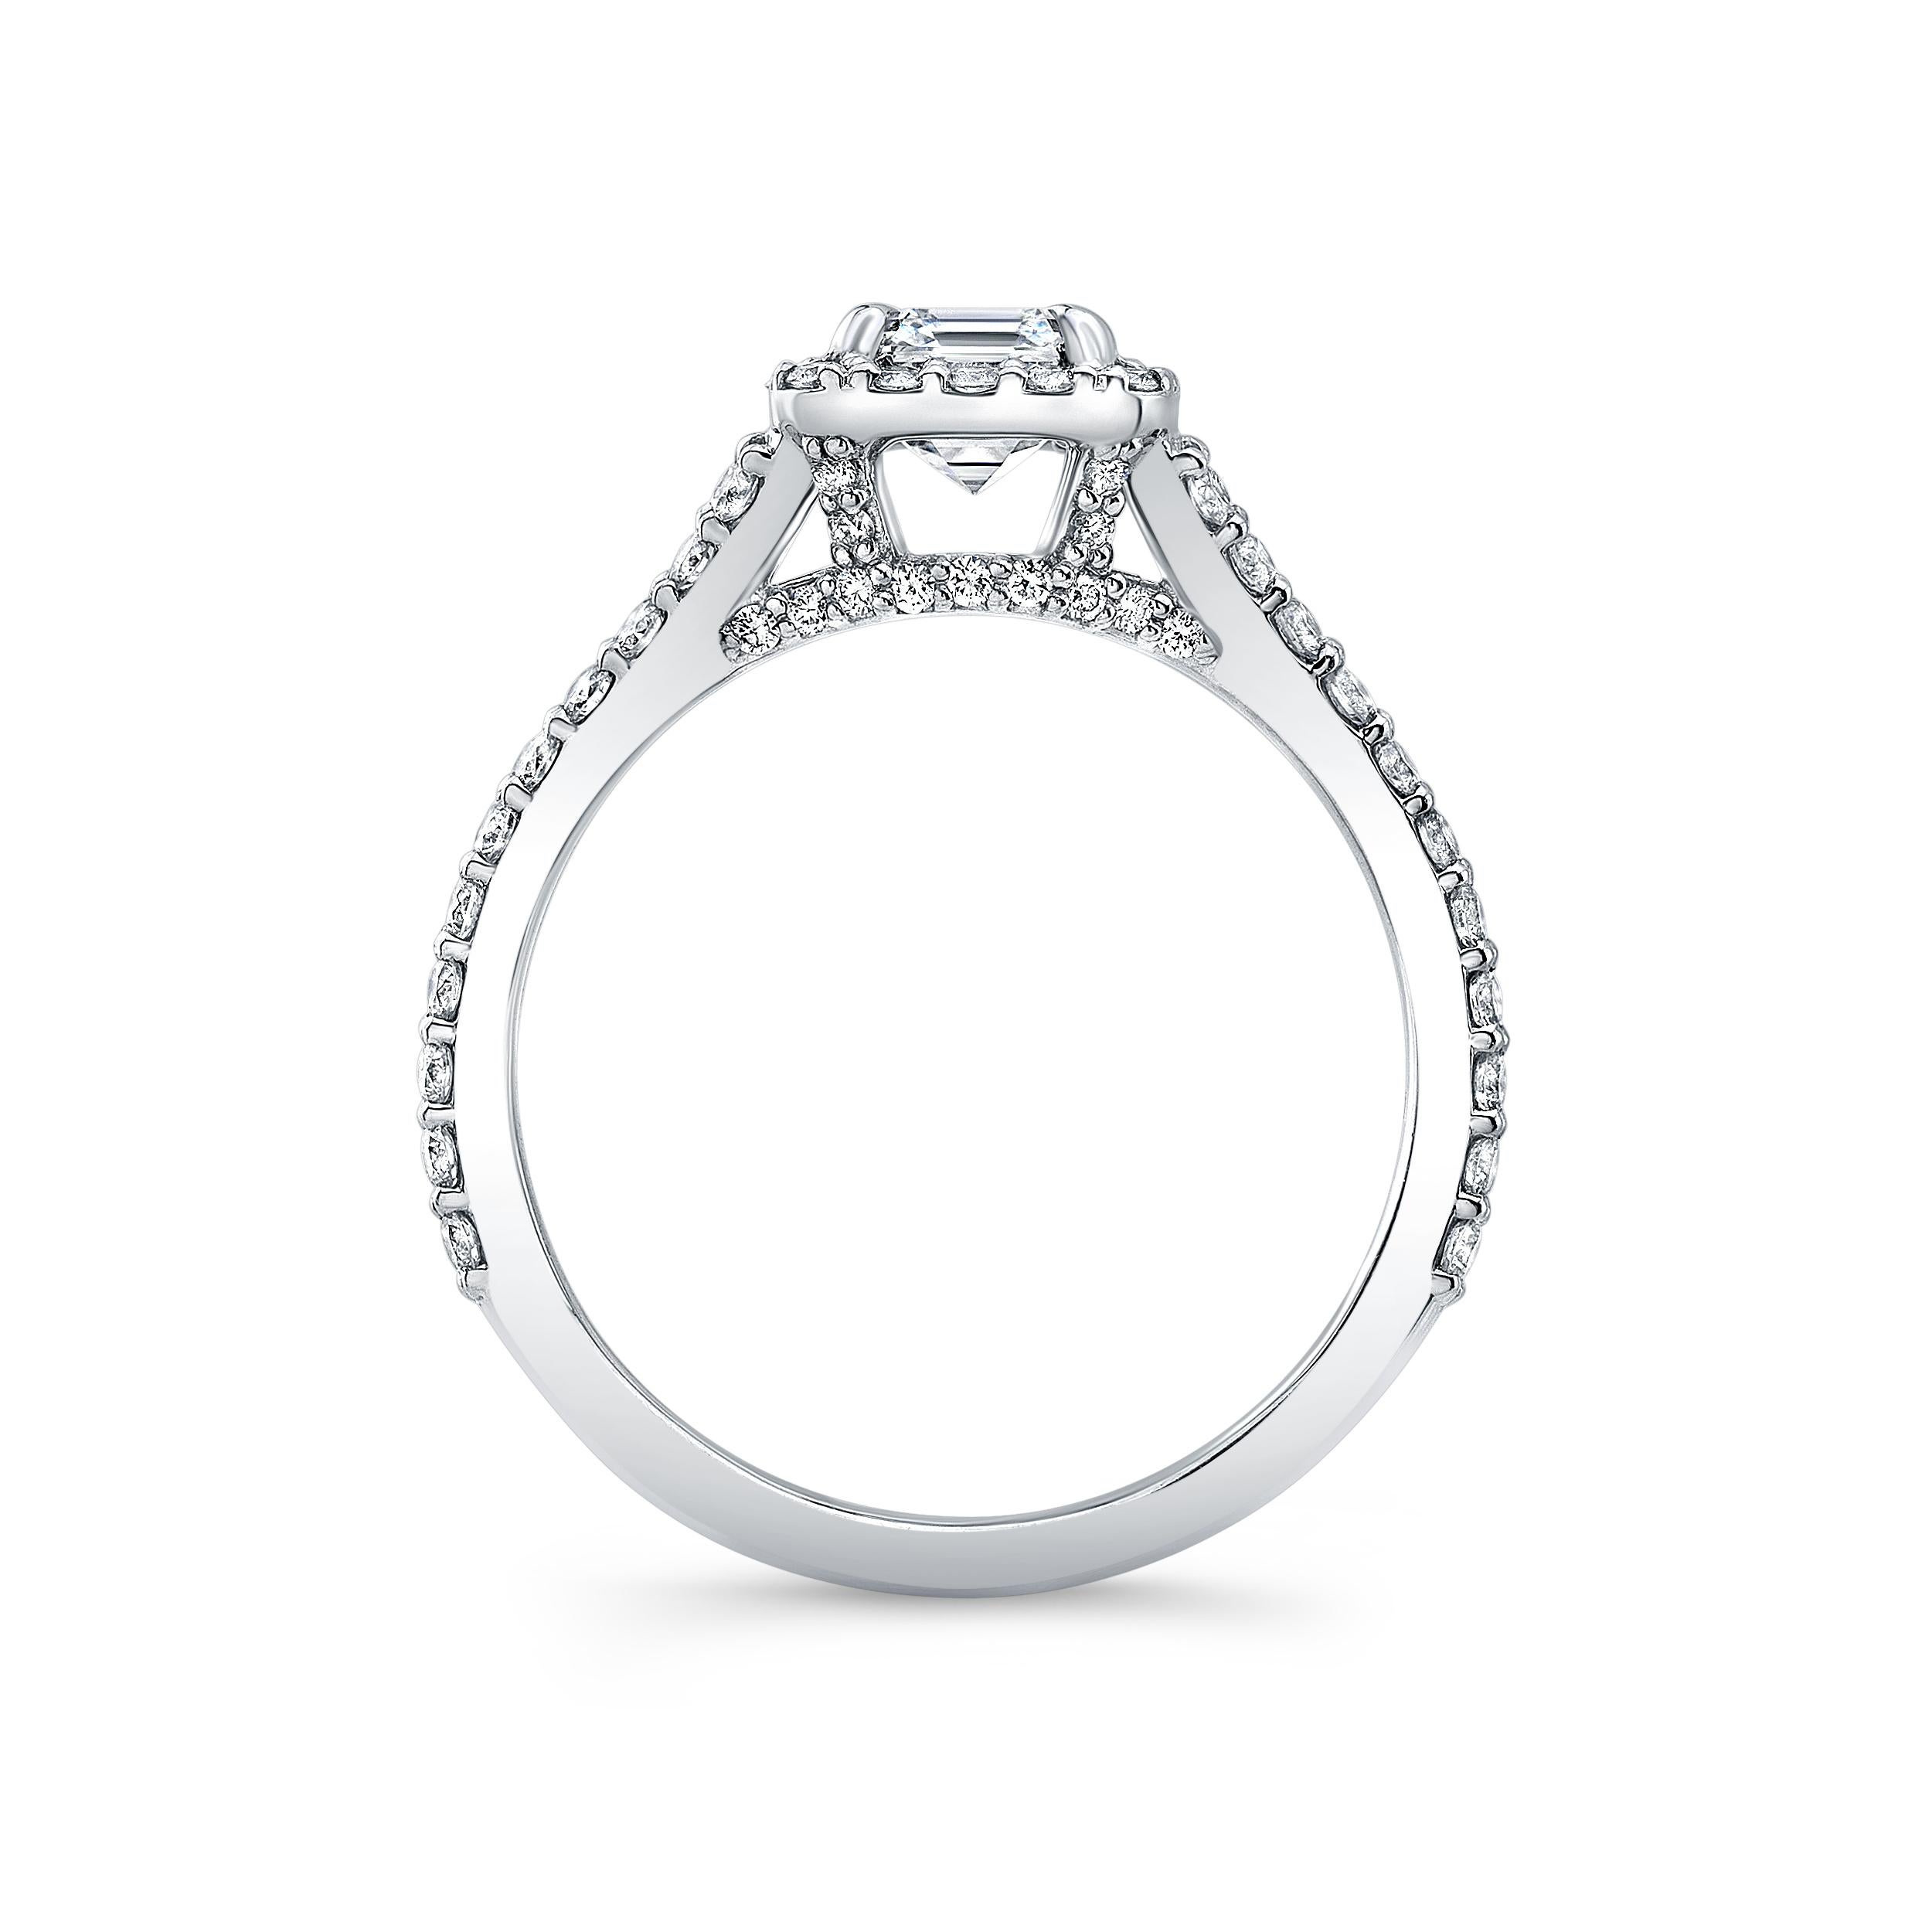 0.76 carat Asscher cut diamond set in platinum split-shank pavé ring.
Color H Clarity VS2
pavé diamonds 0.71 total weight
GIA
6.5 ring size